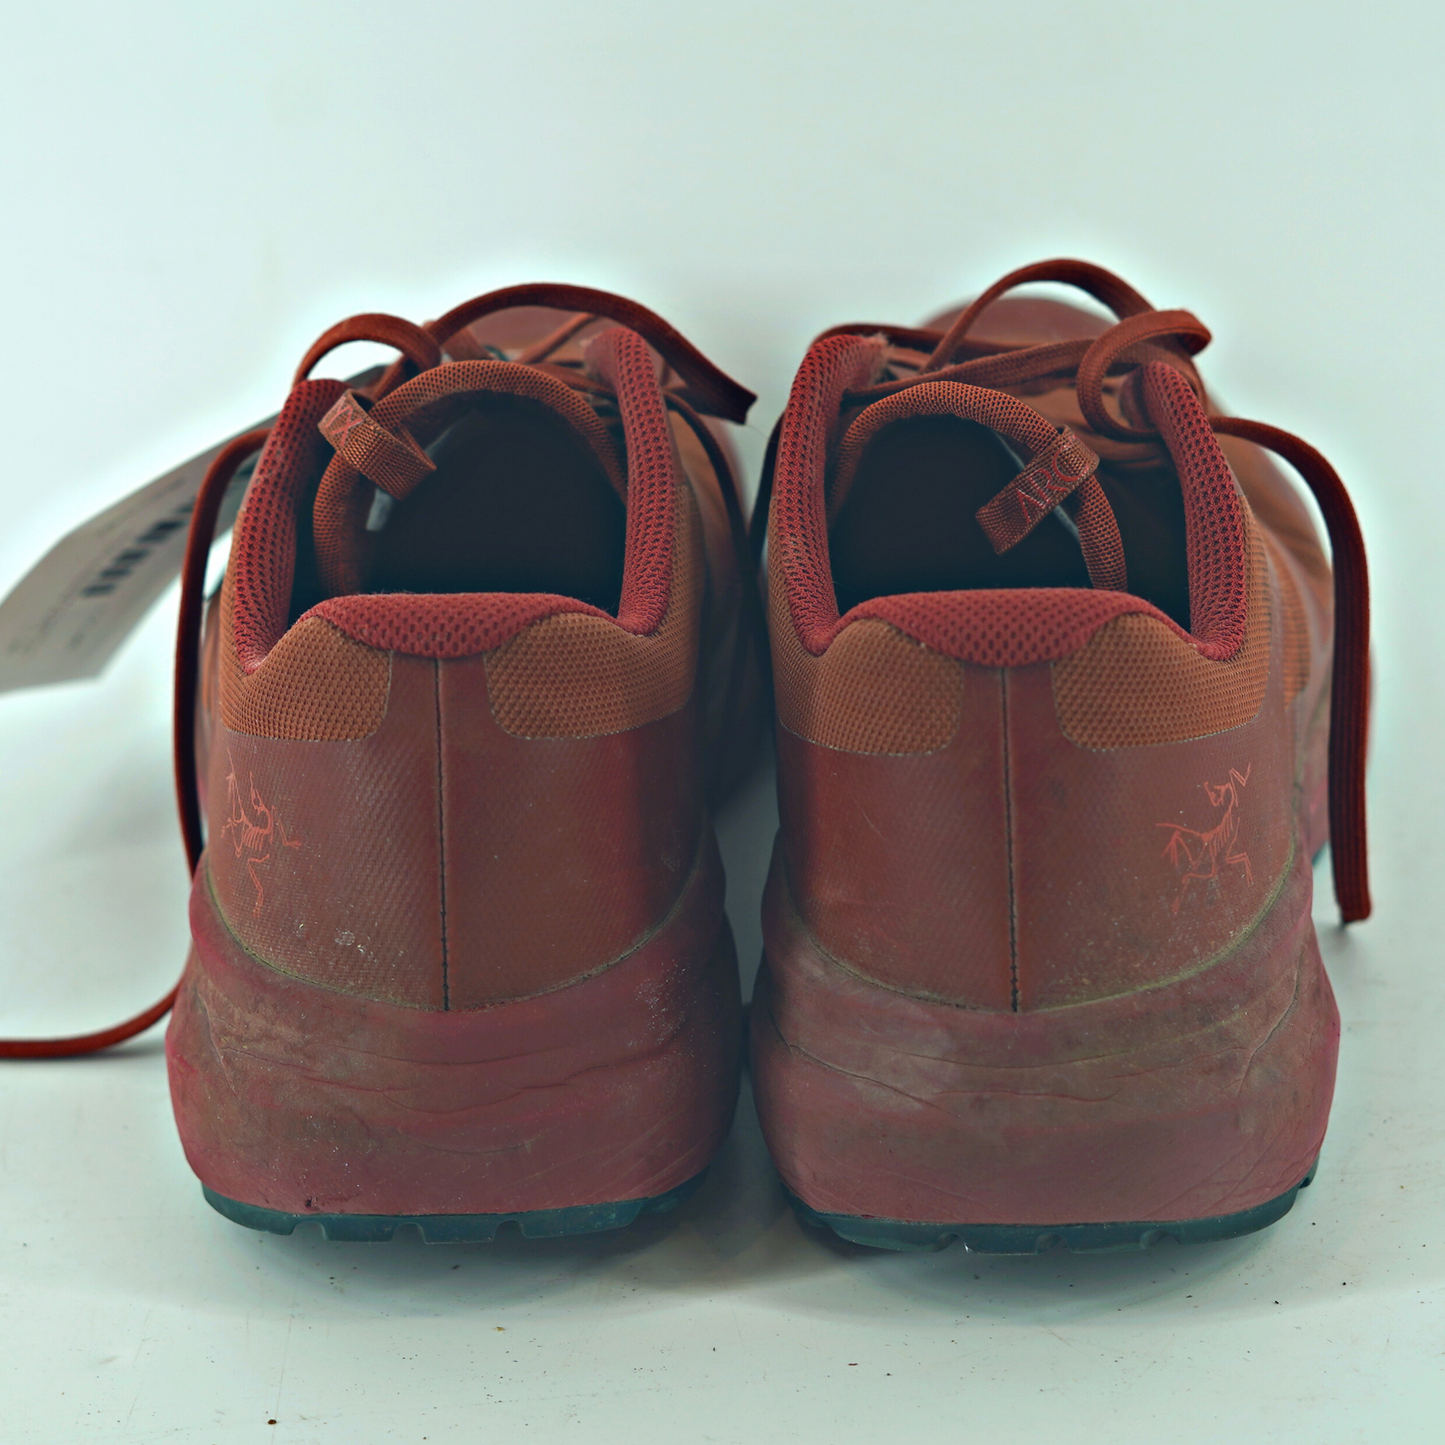 Arc’teryx Running Shoes